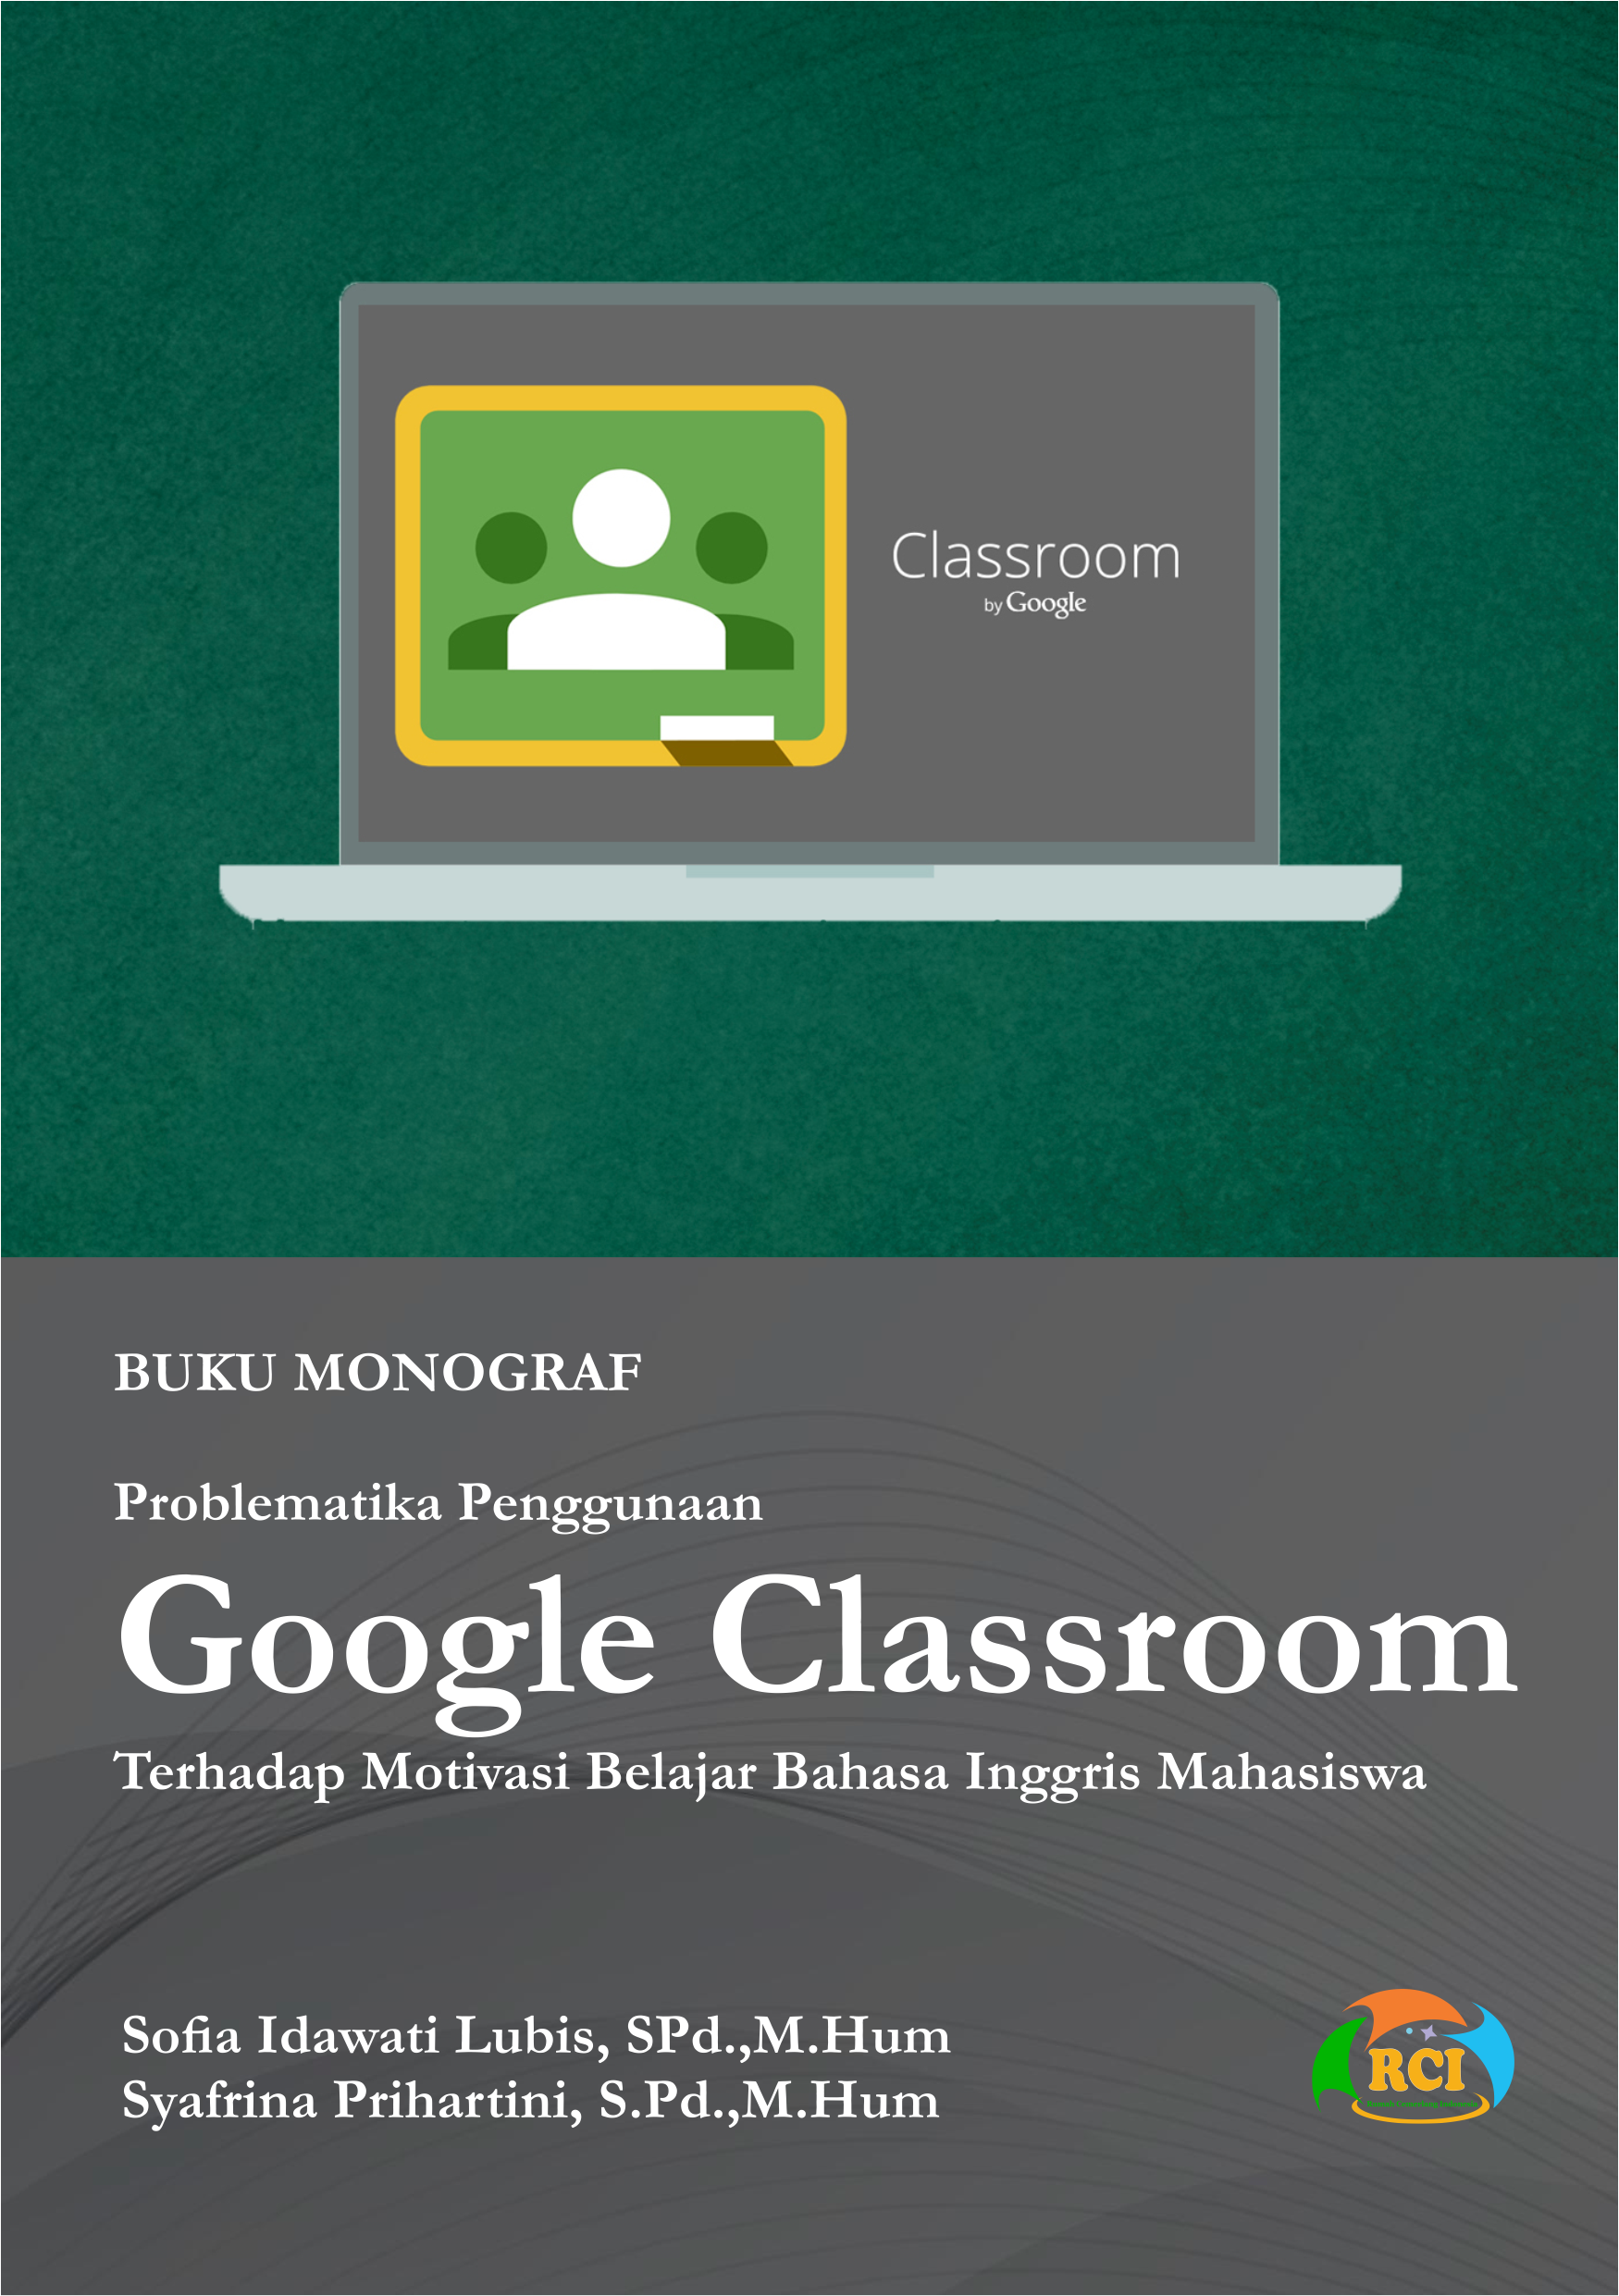 Buku monograf problematika penggunaan google classroom terhadap motivasi belajar bahasa Inggris mahasiswa [sumber elektronis]